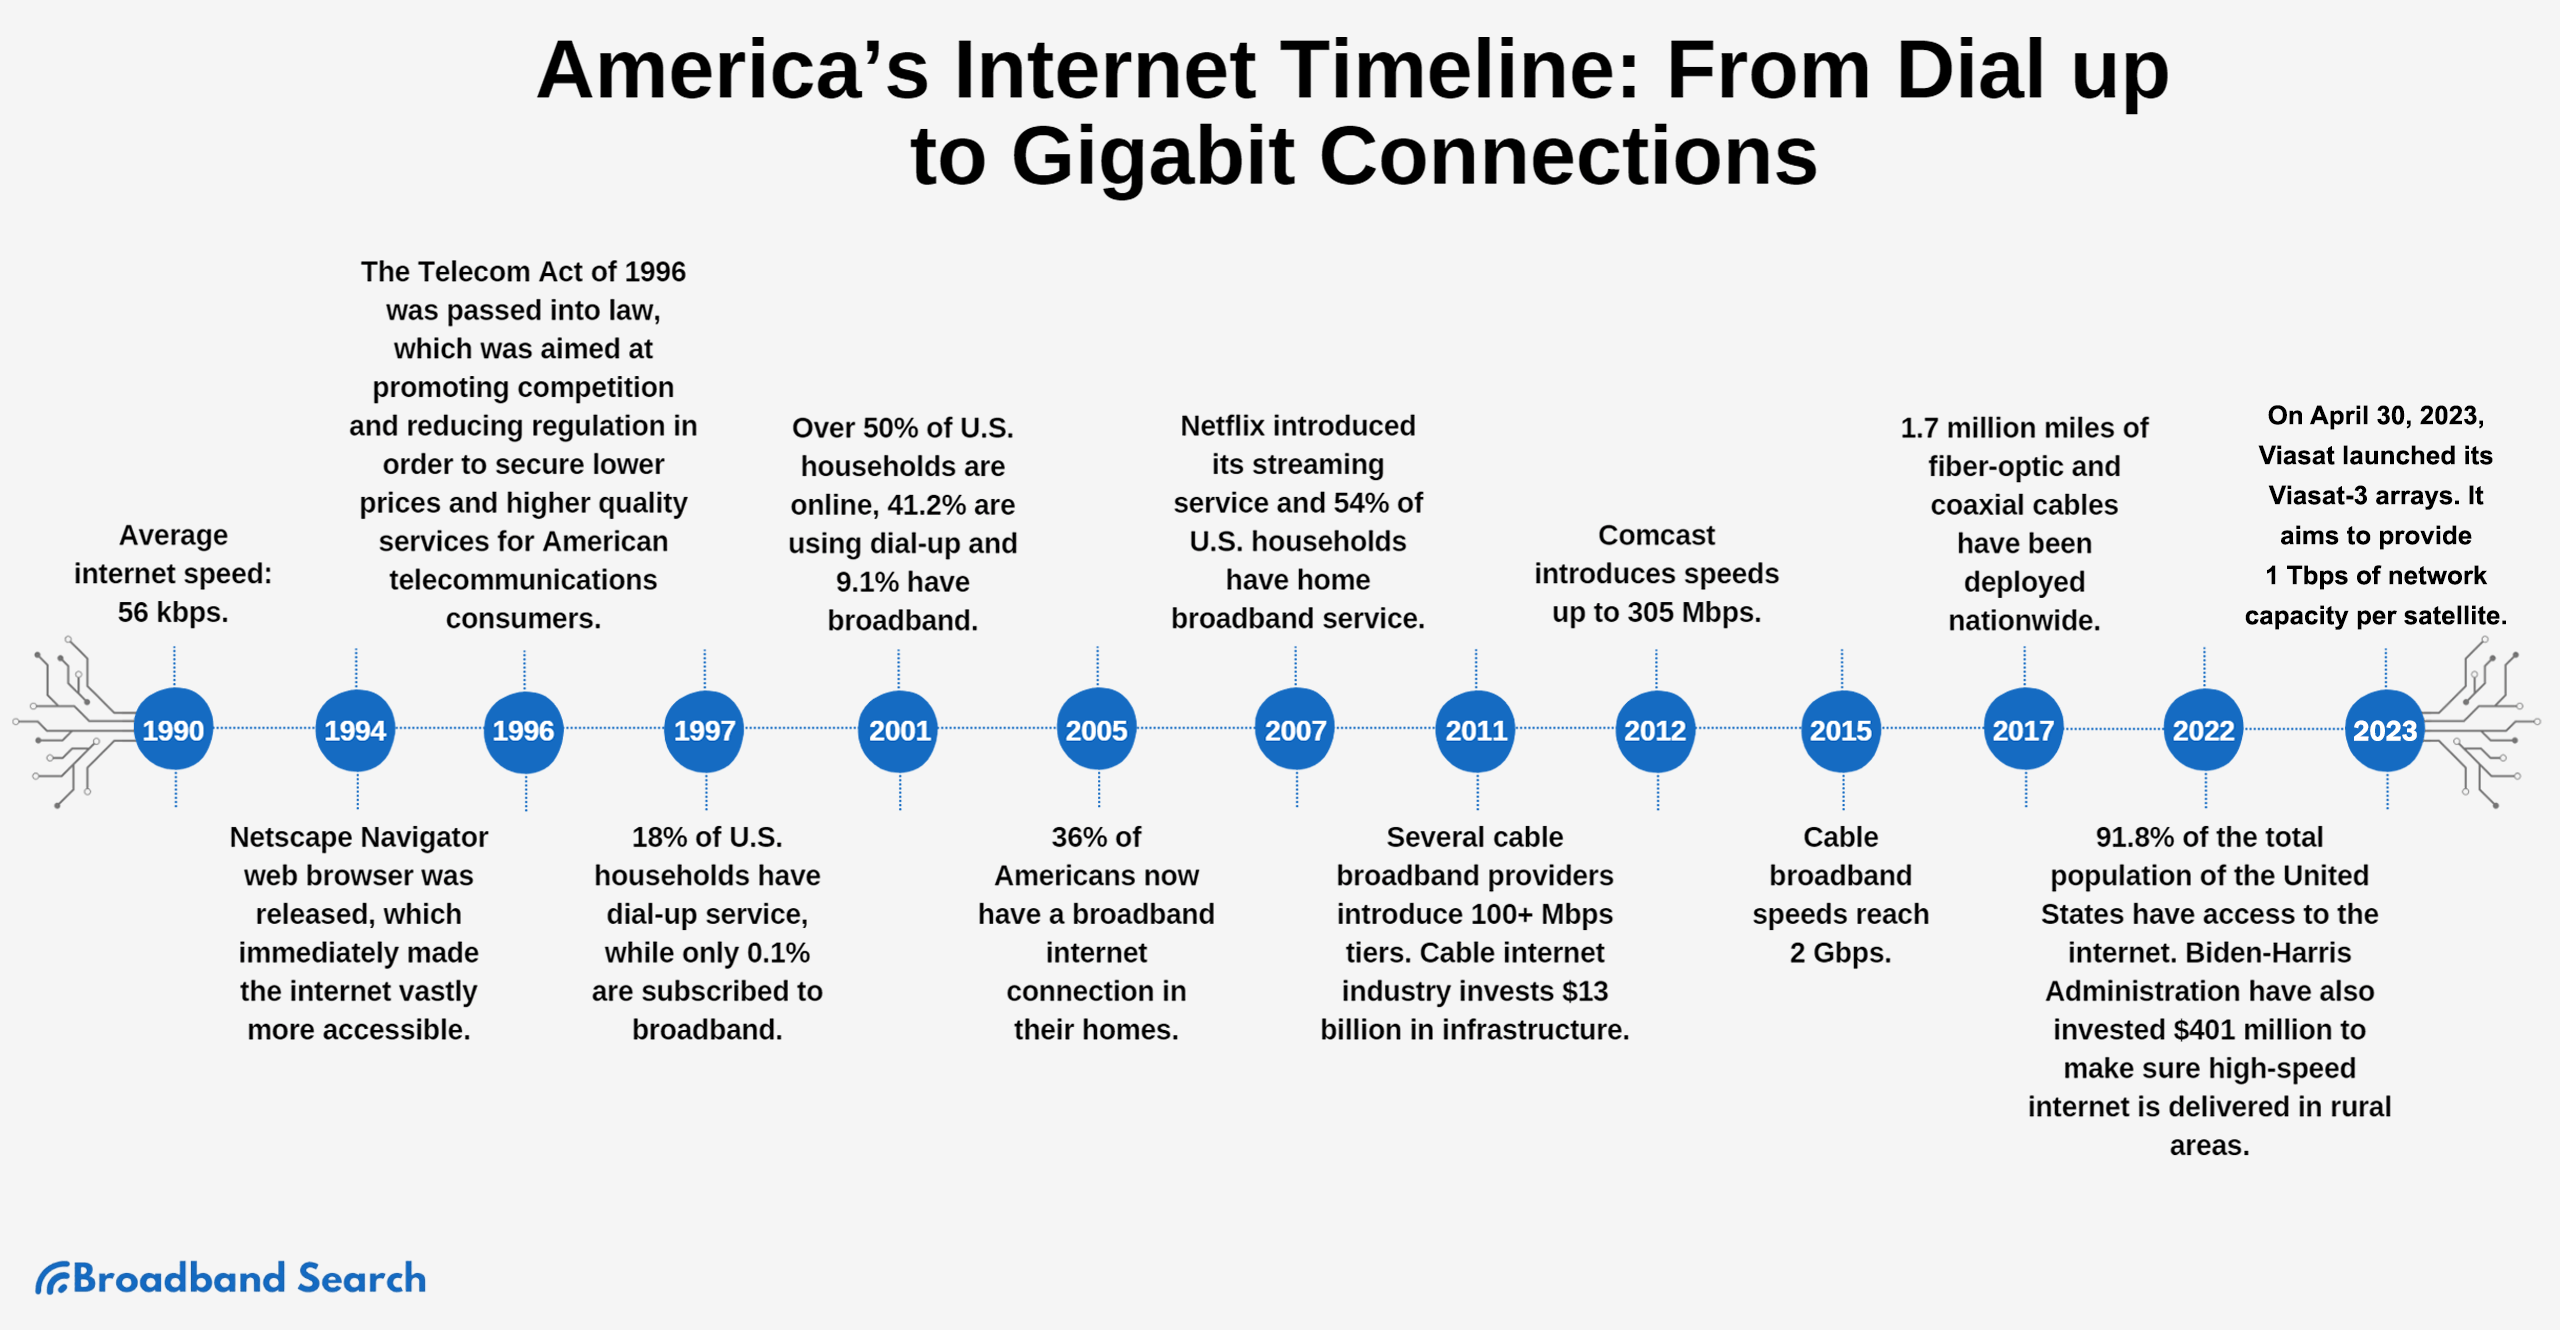 America's Internet Timeline 2023